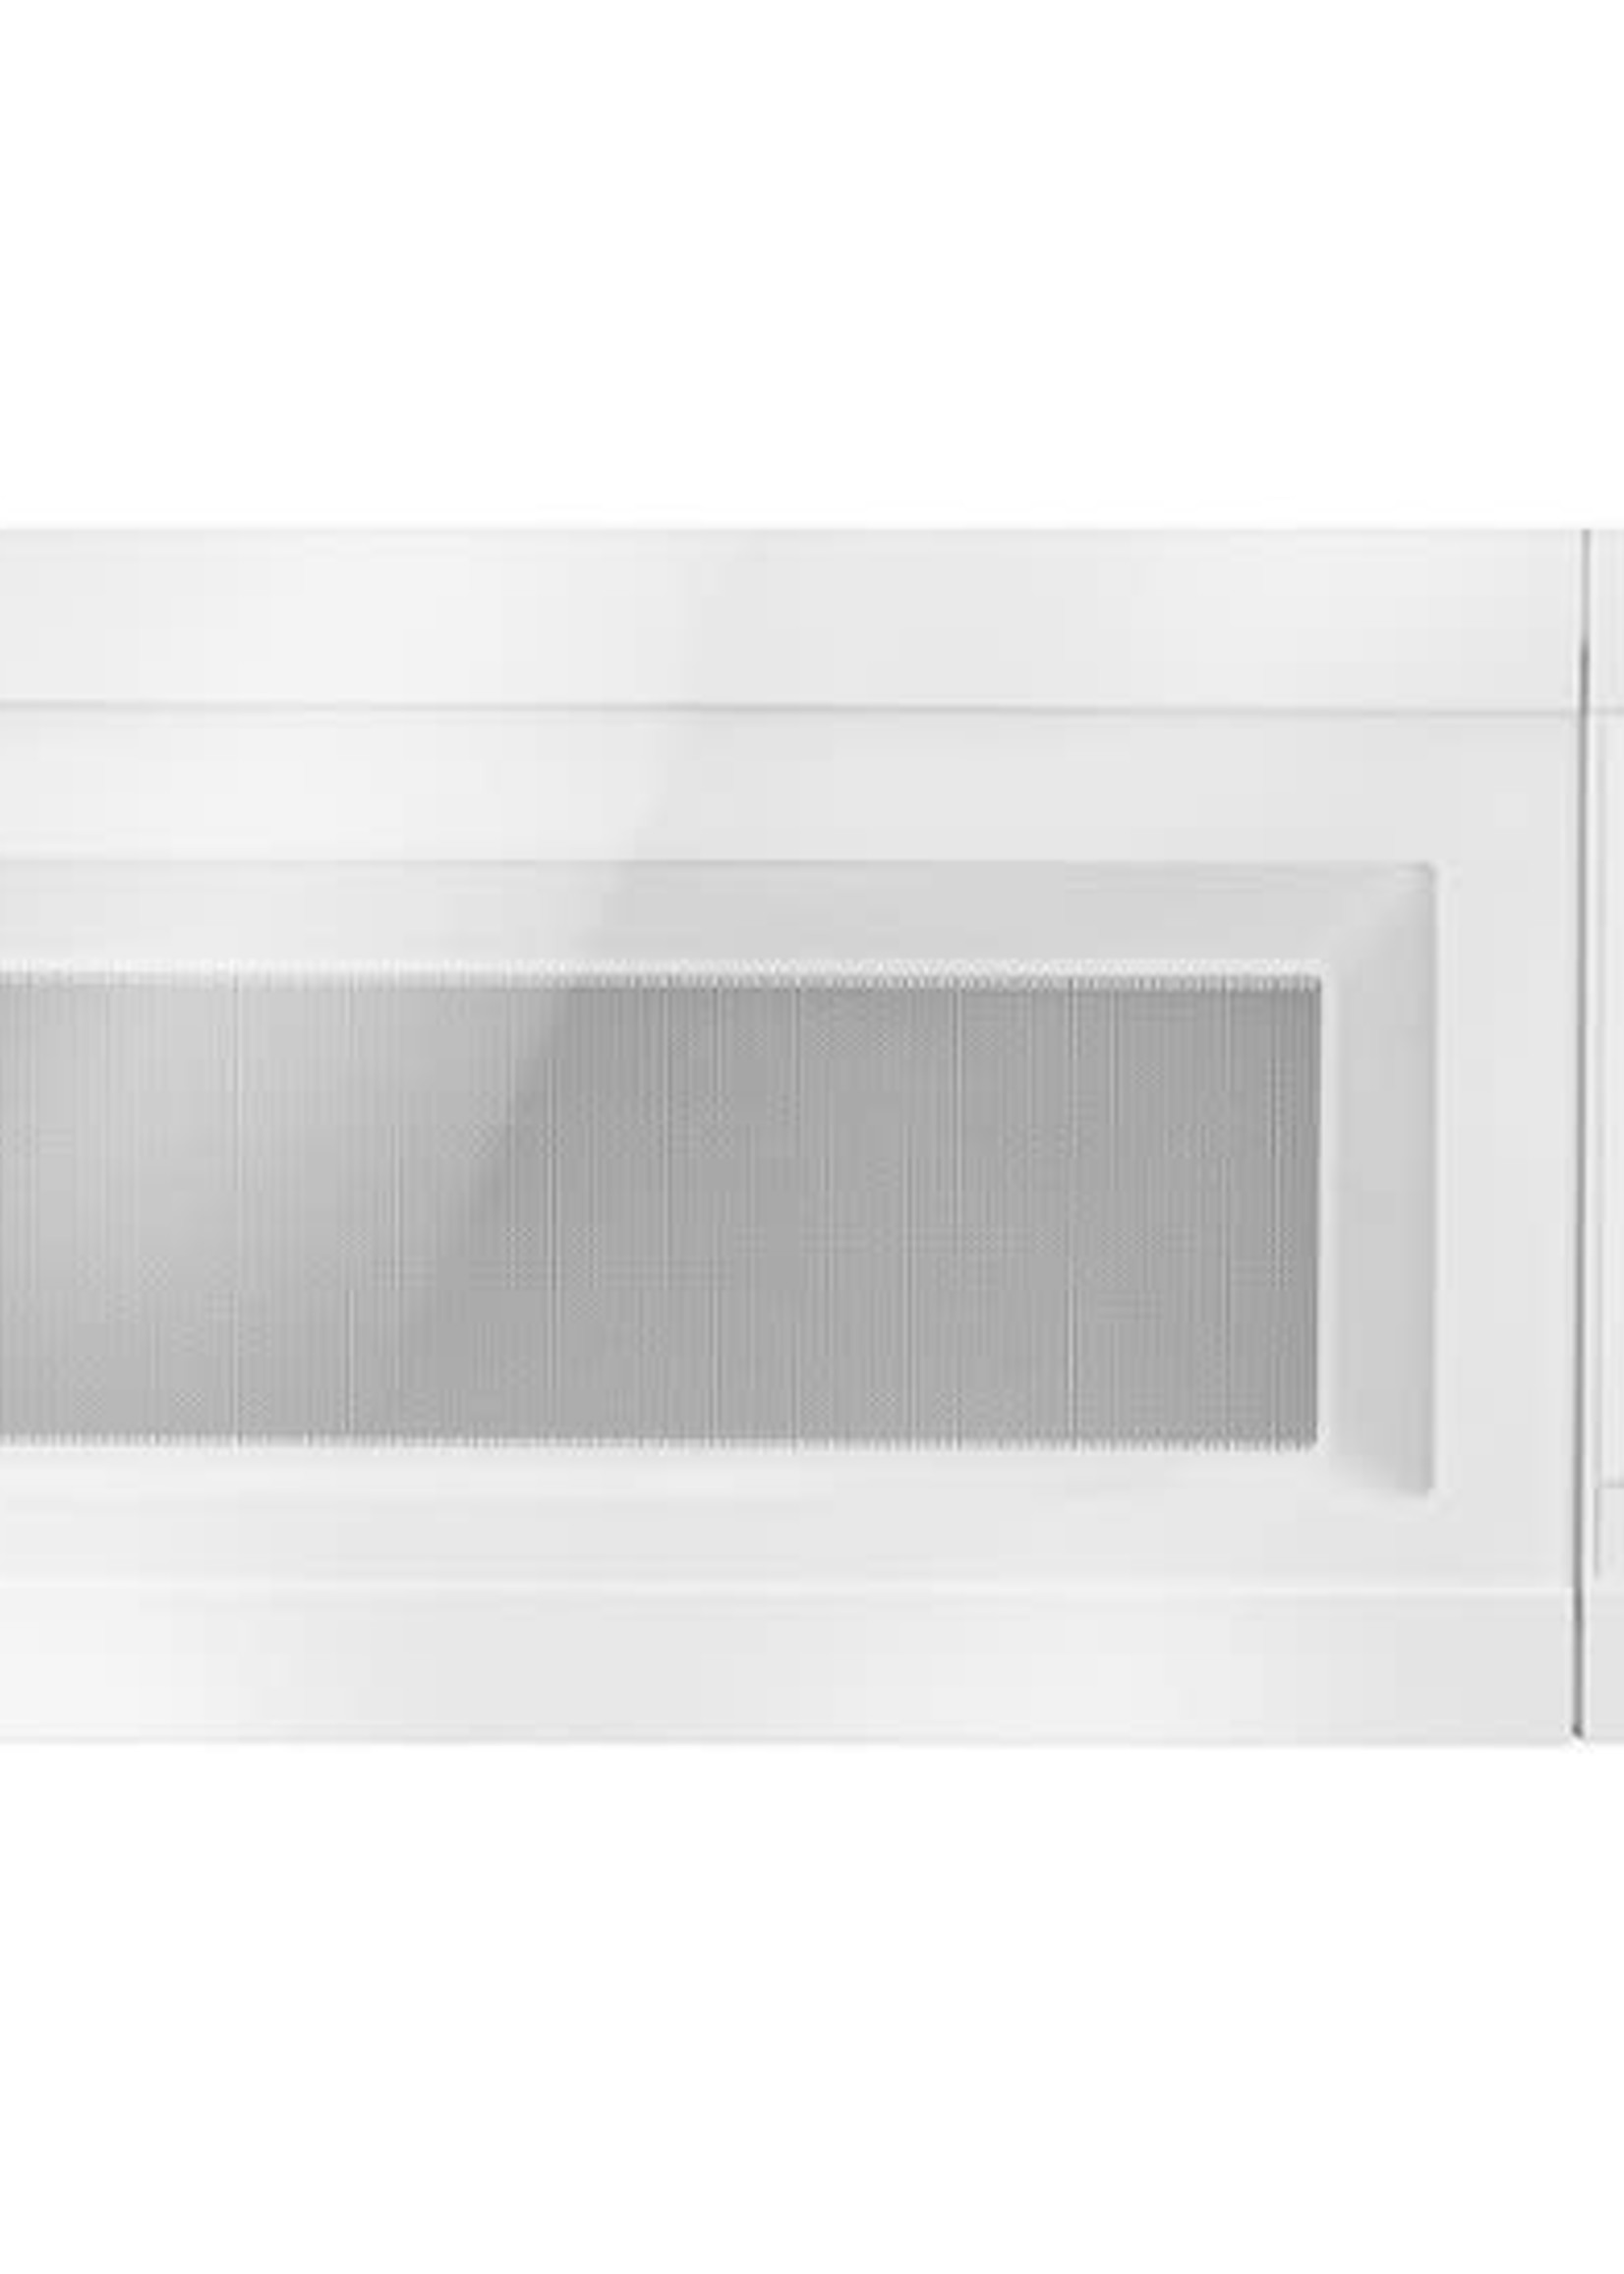 Amana *Amana  AMV2307PFW  1.6 Cu. Ft. Over-the-Range Microwave - White